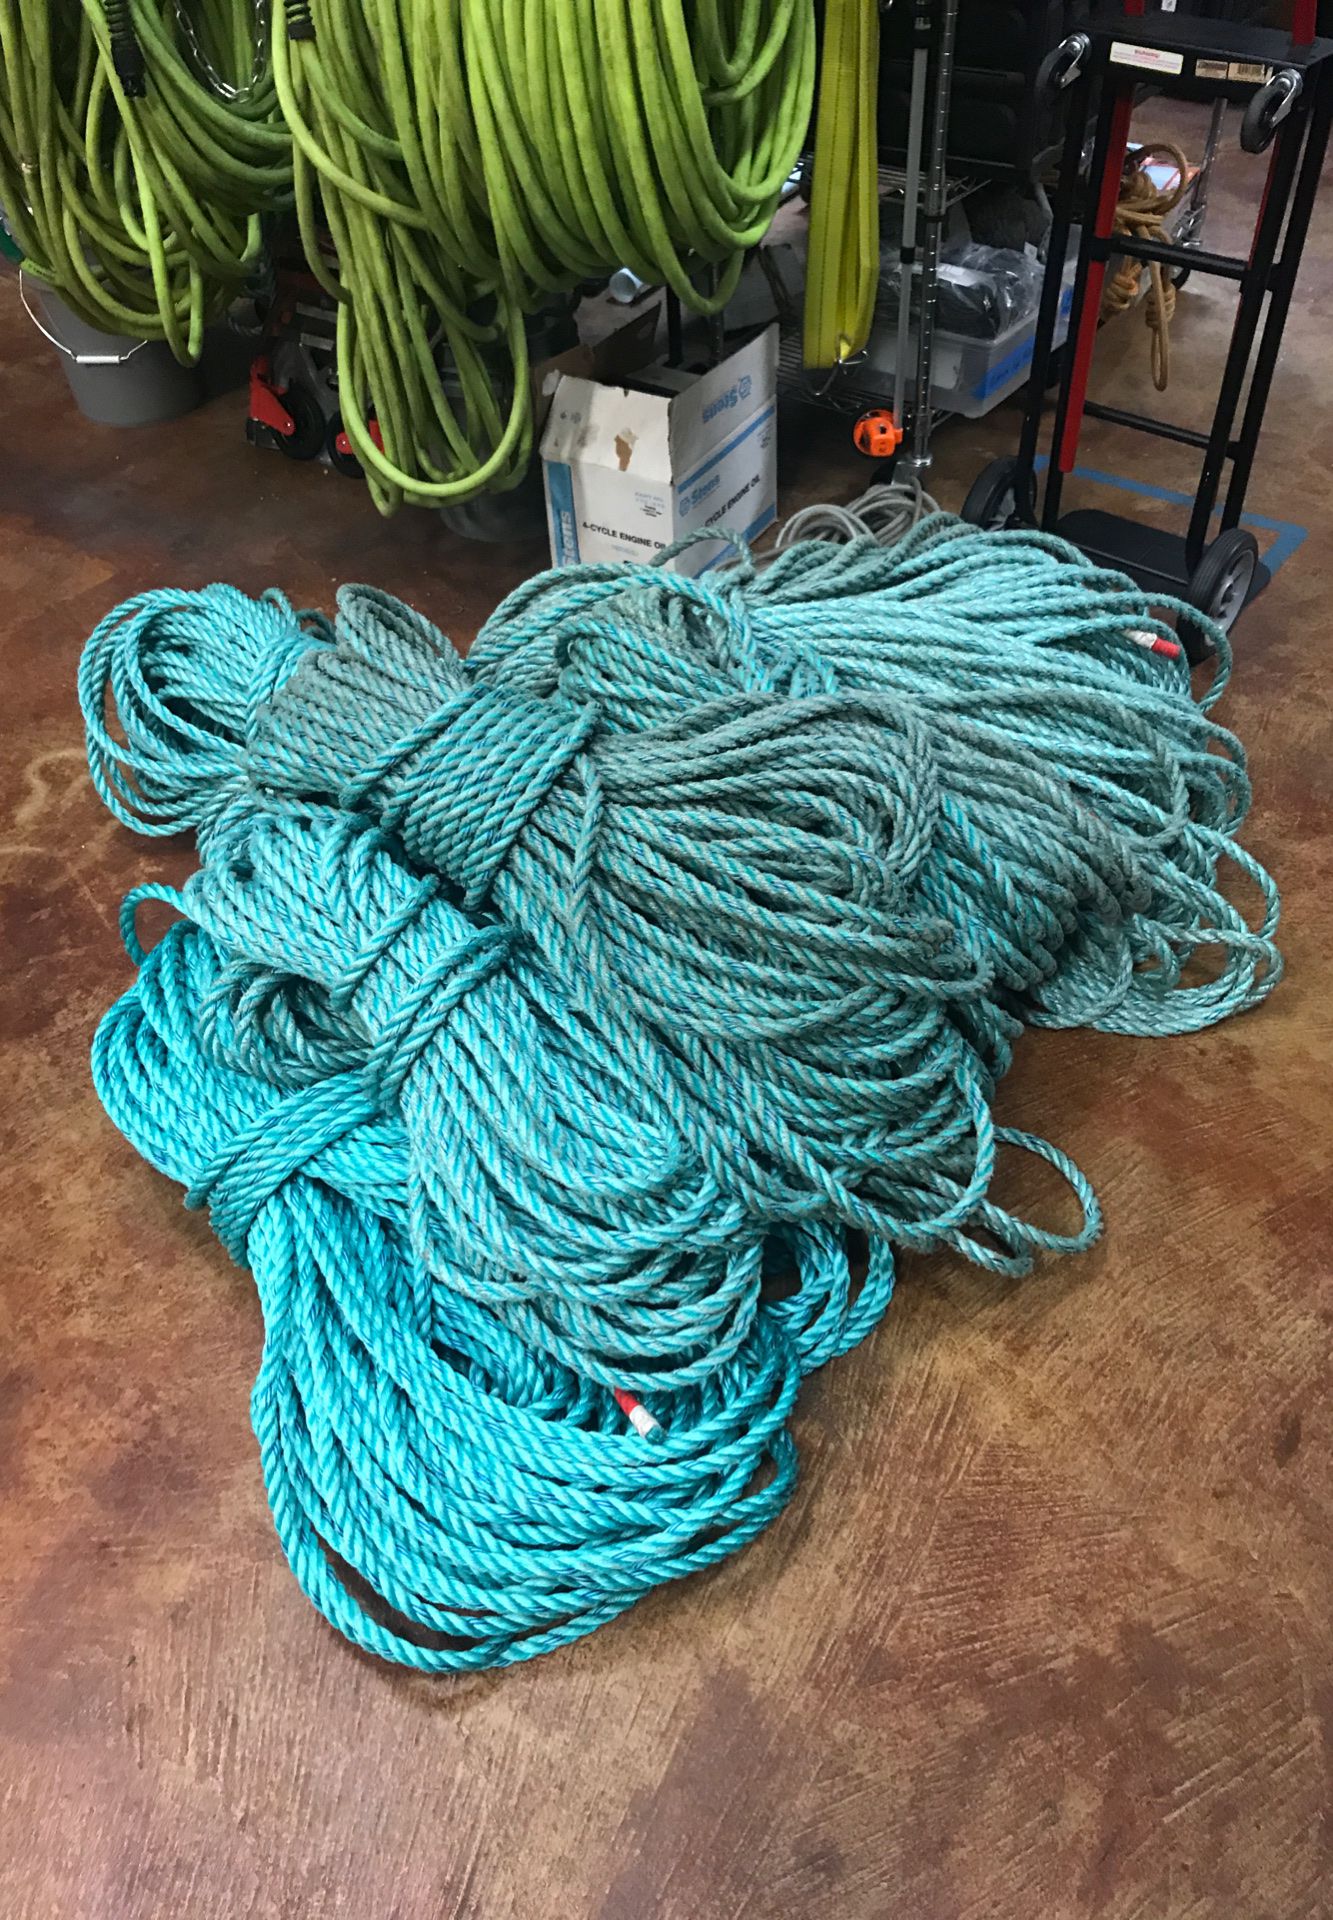 5/8” inch blue steel rope